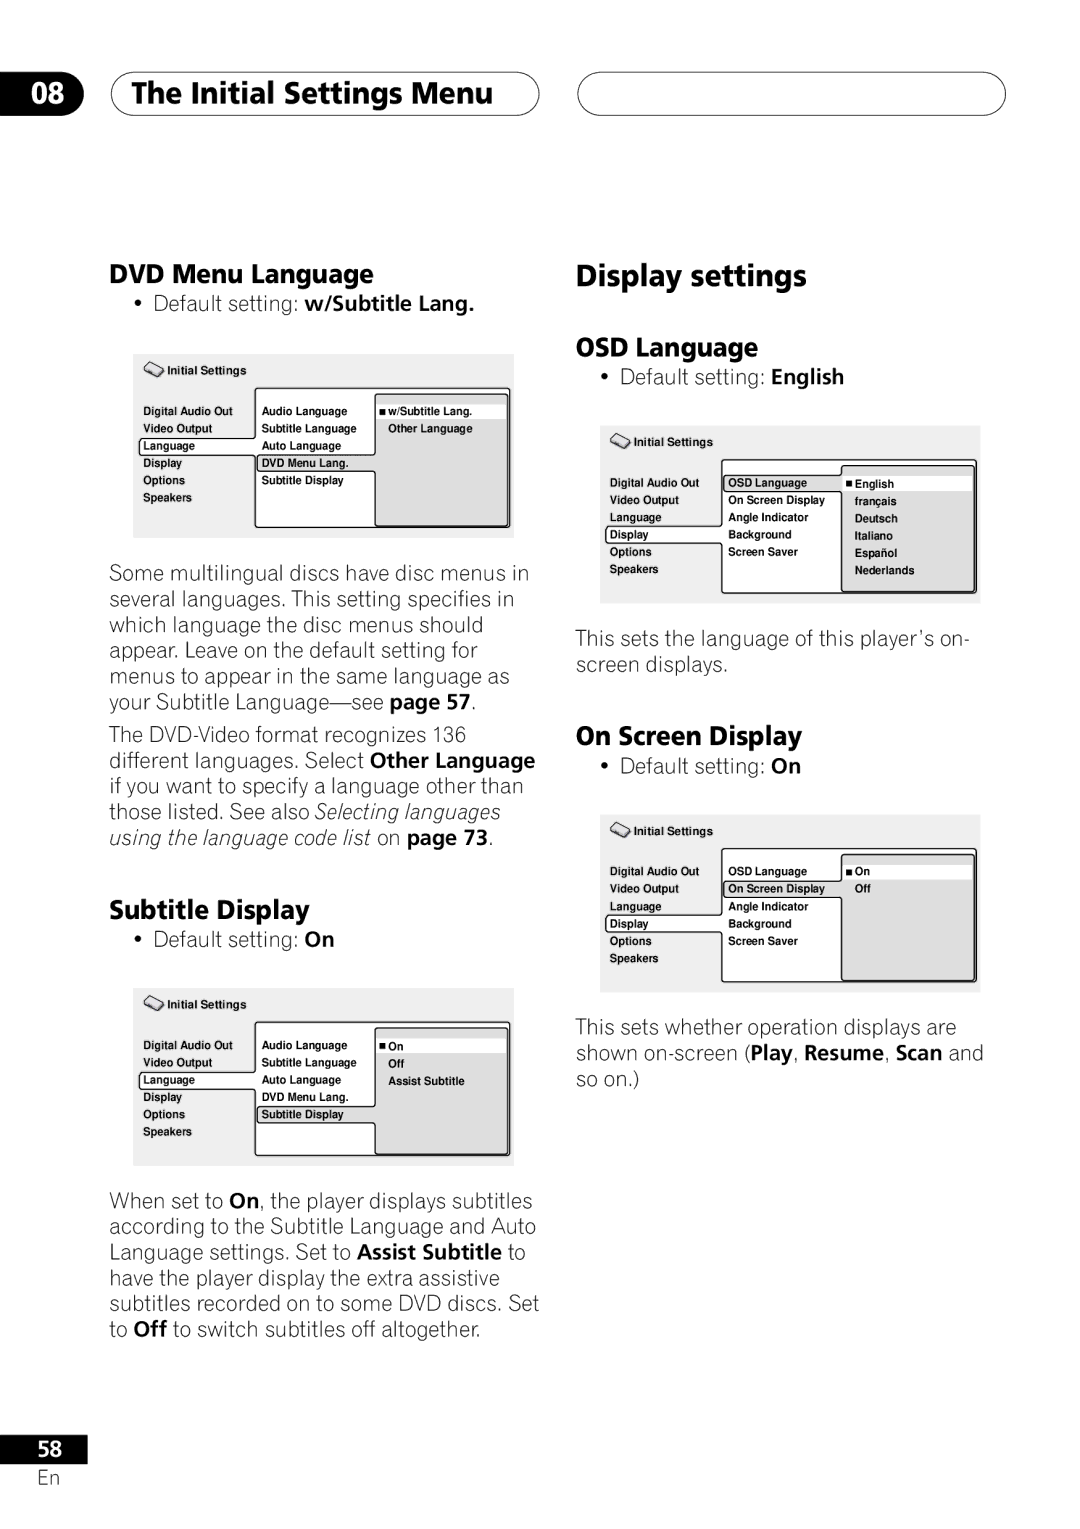 Pioneer DV-45A Display settings, DVD Menu Language, Subtitle Display, OSD Language, On Screen Display 